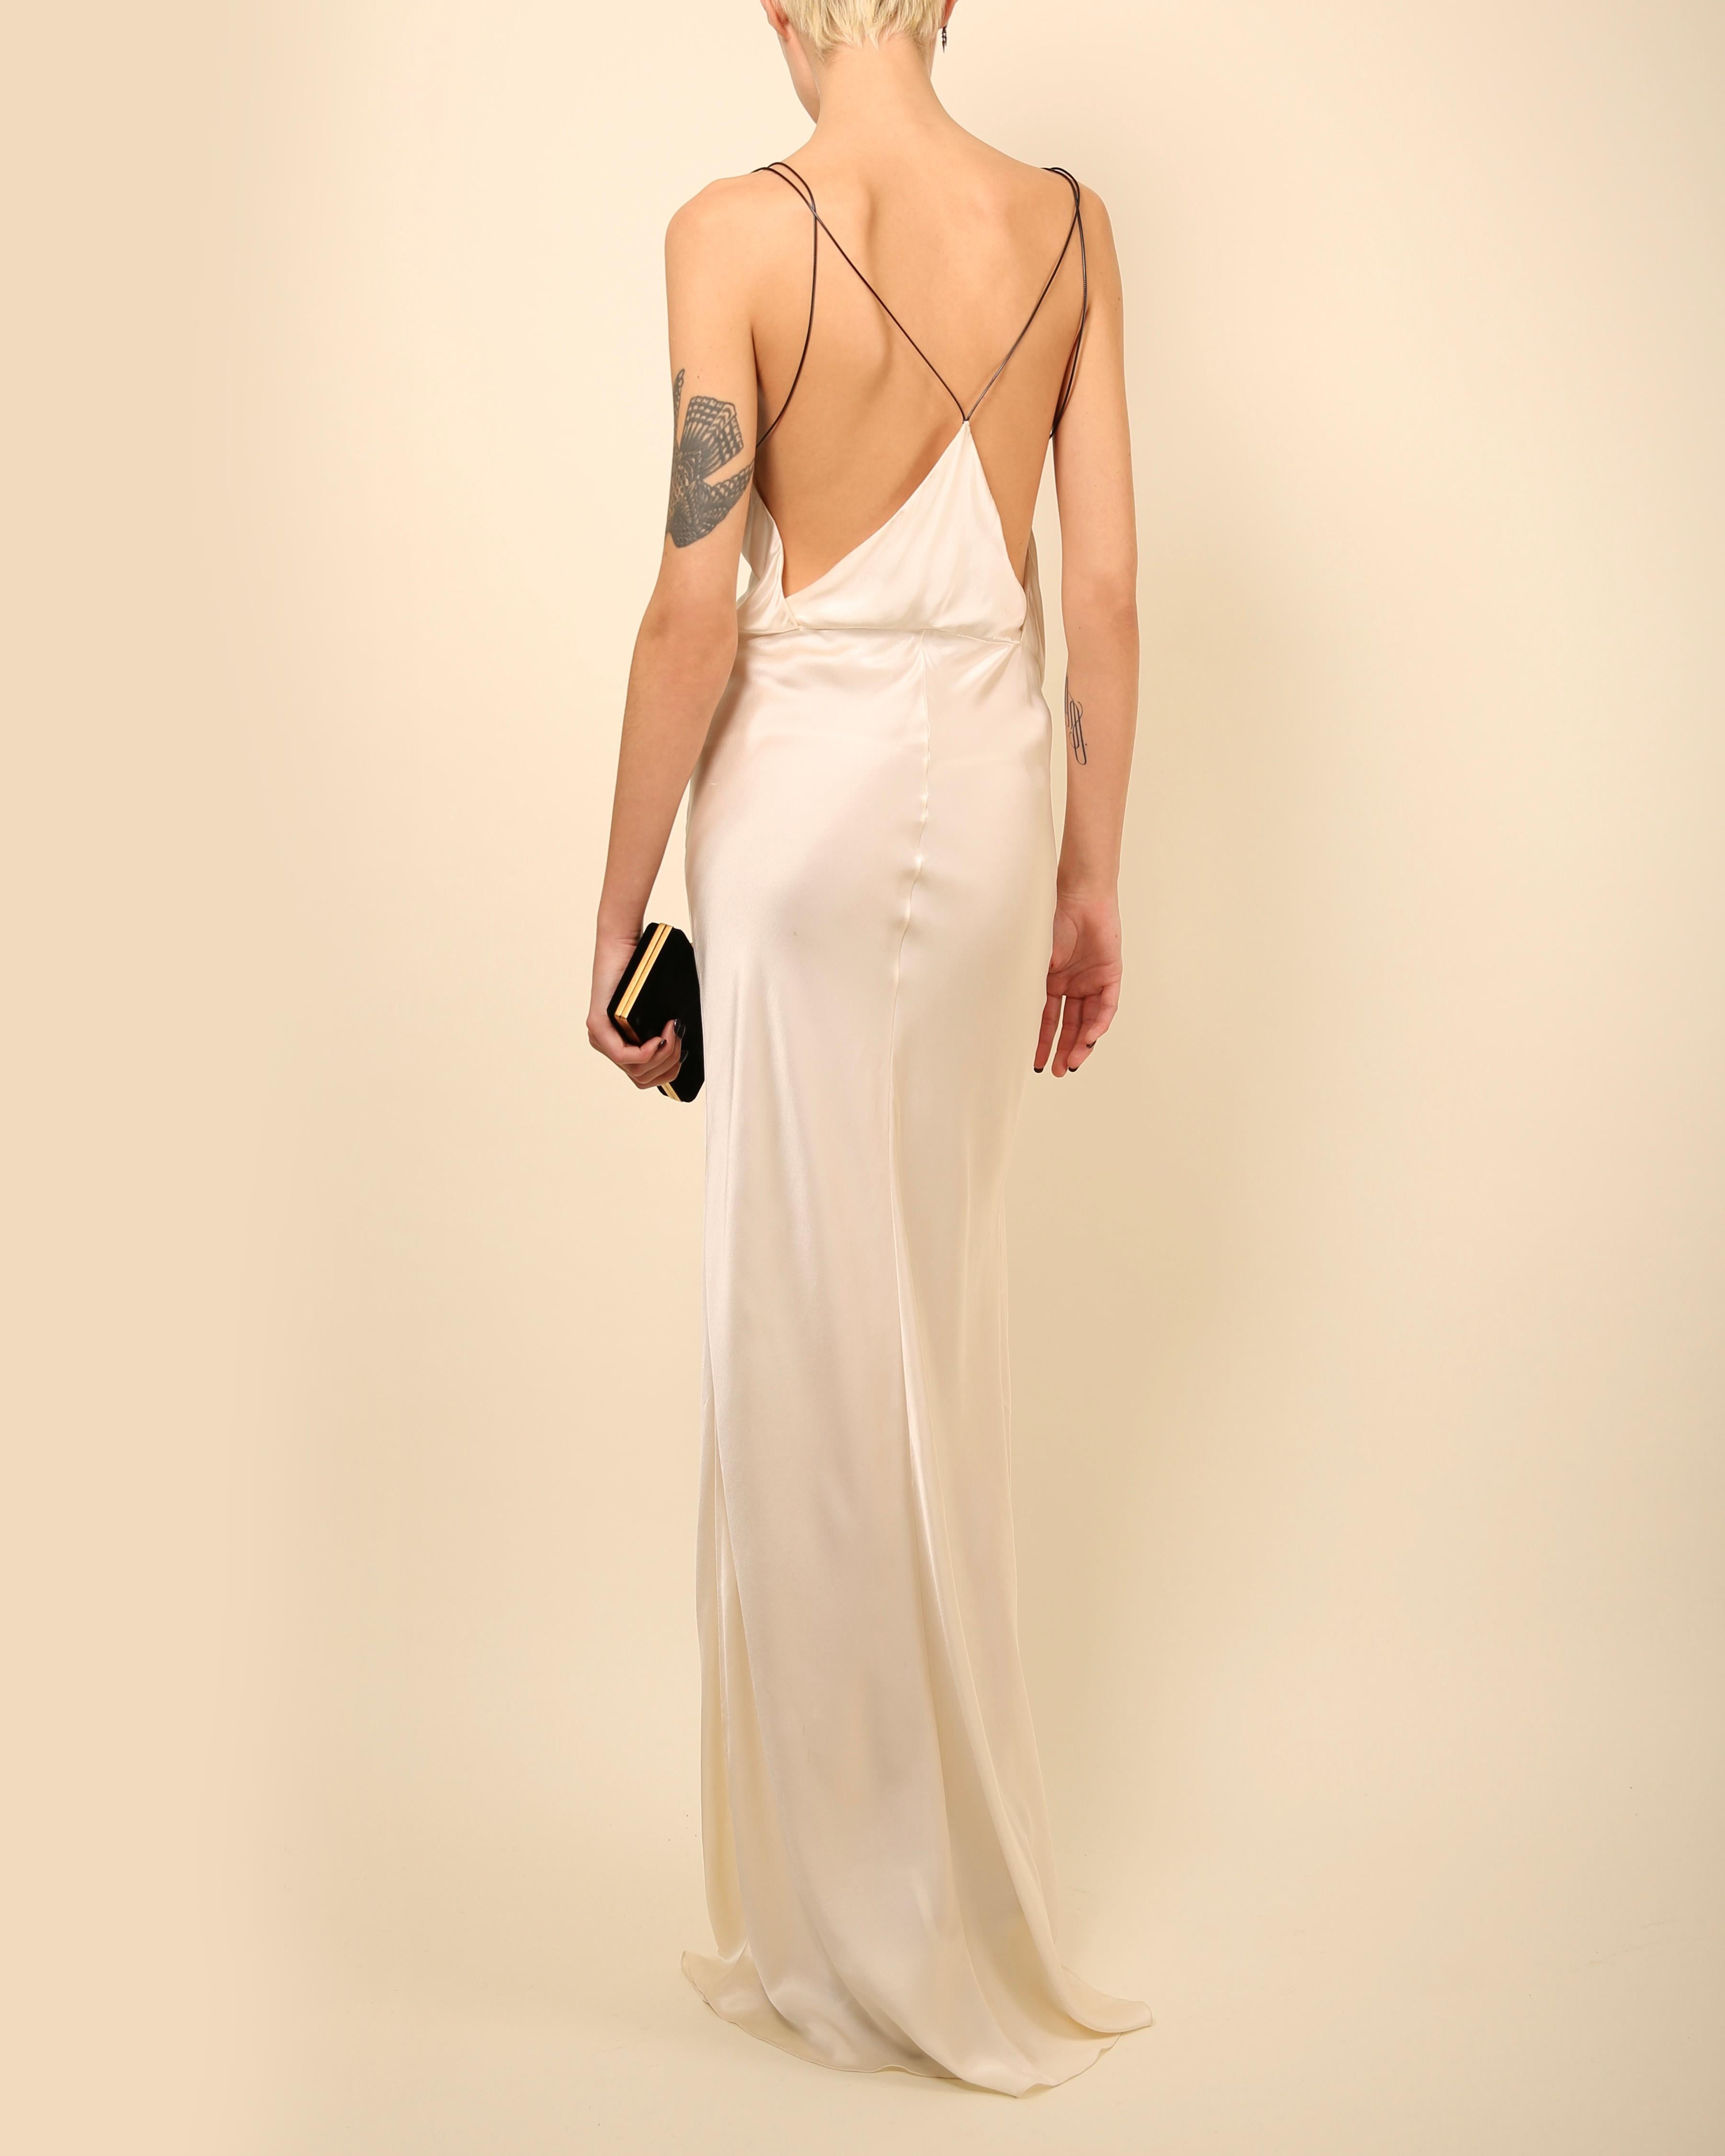 White Jason Wu Ivory black leather strap backless silk maxi slip dress wedding gown For Sale